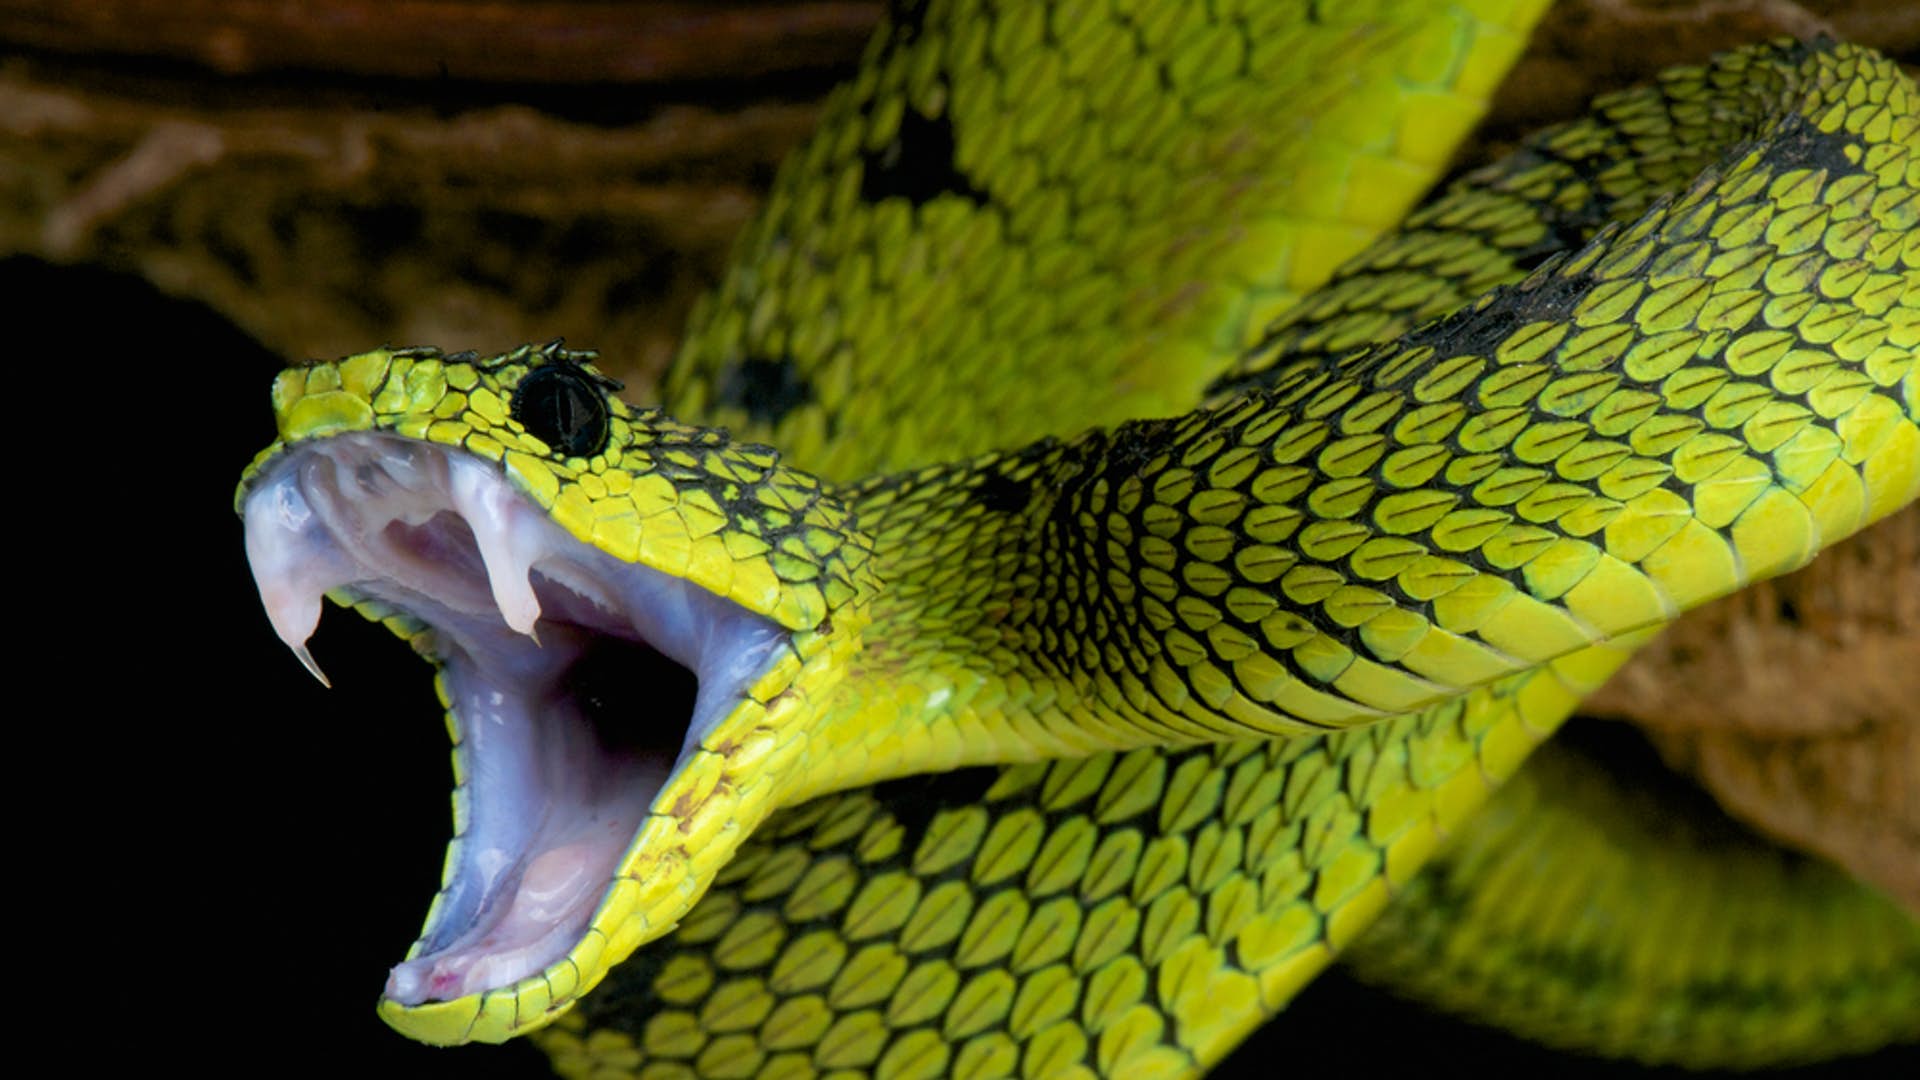 DNA test identifies venomous snakes from their bites